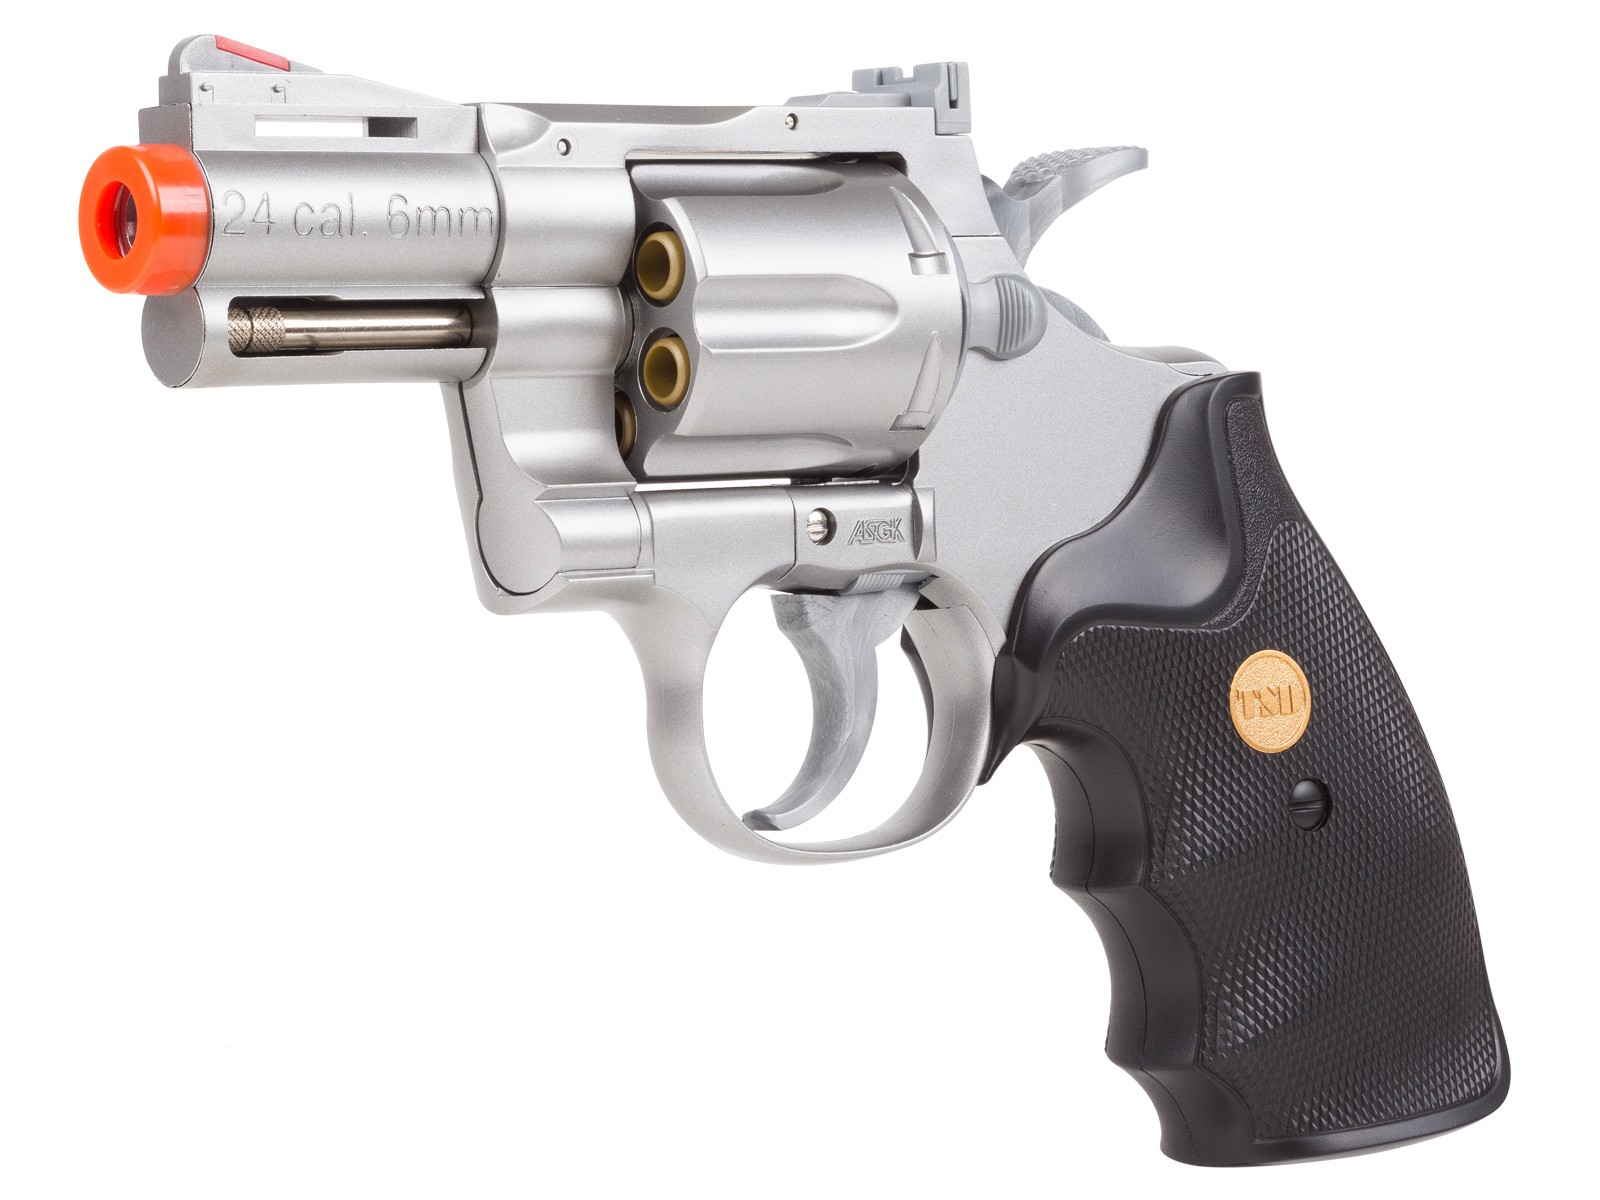 TSD UHC 939 2.5 inch barrel revolver, Silver/Black